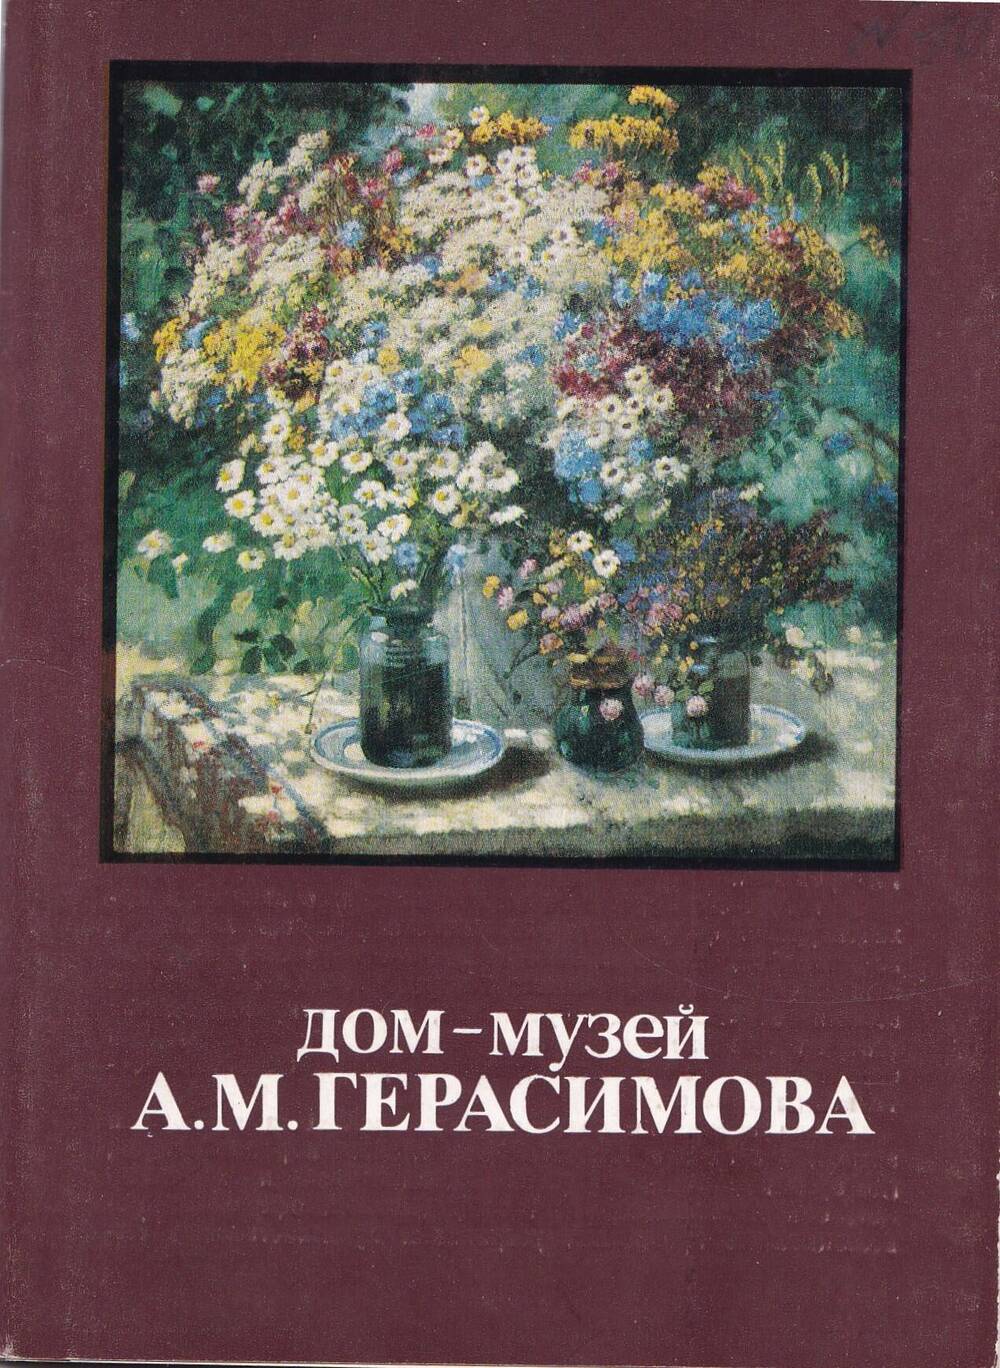 Набор открыток «Дом-музей  А. М. Герасимова»